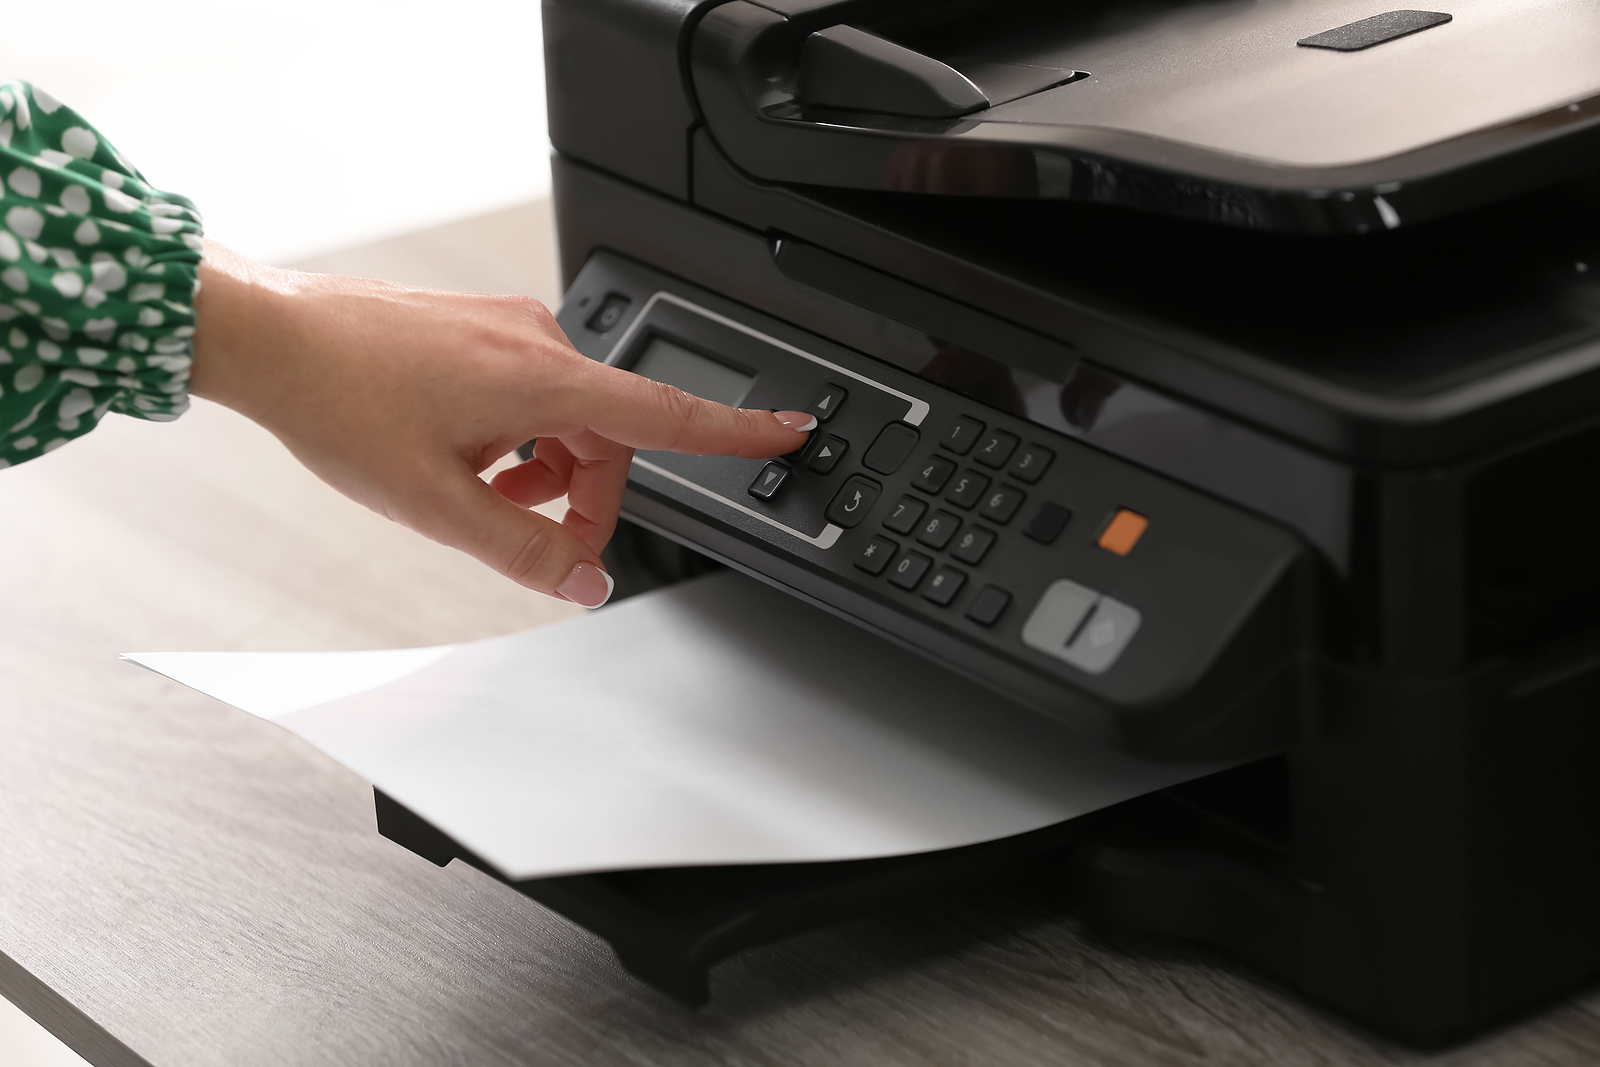 Printer management vulnerability exploited